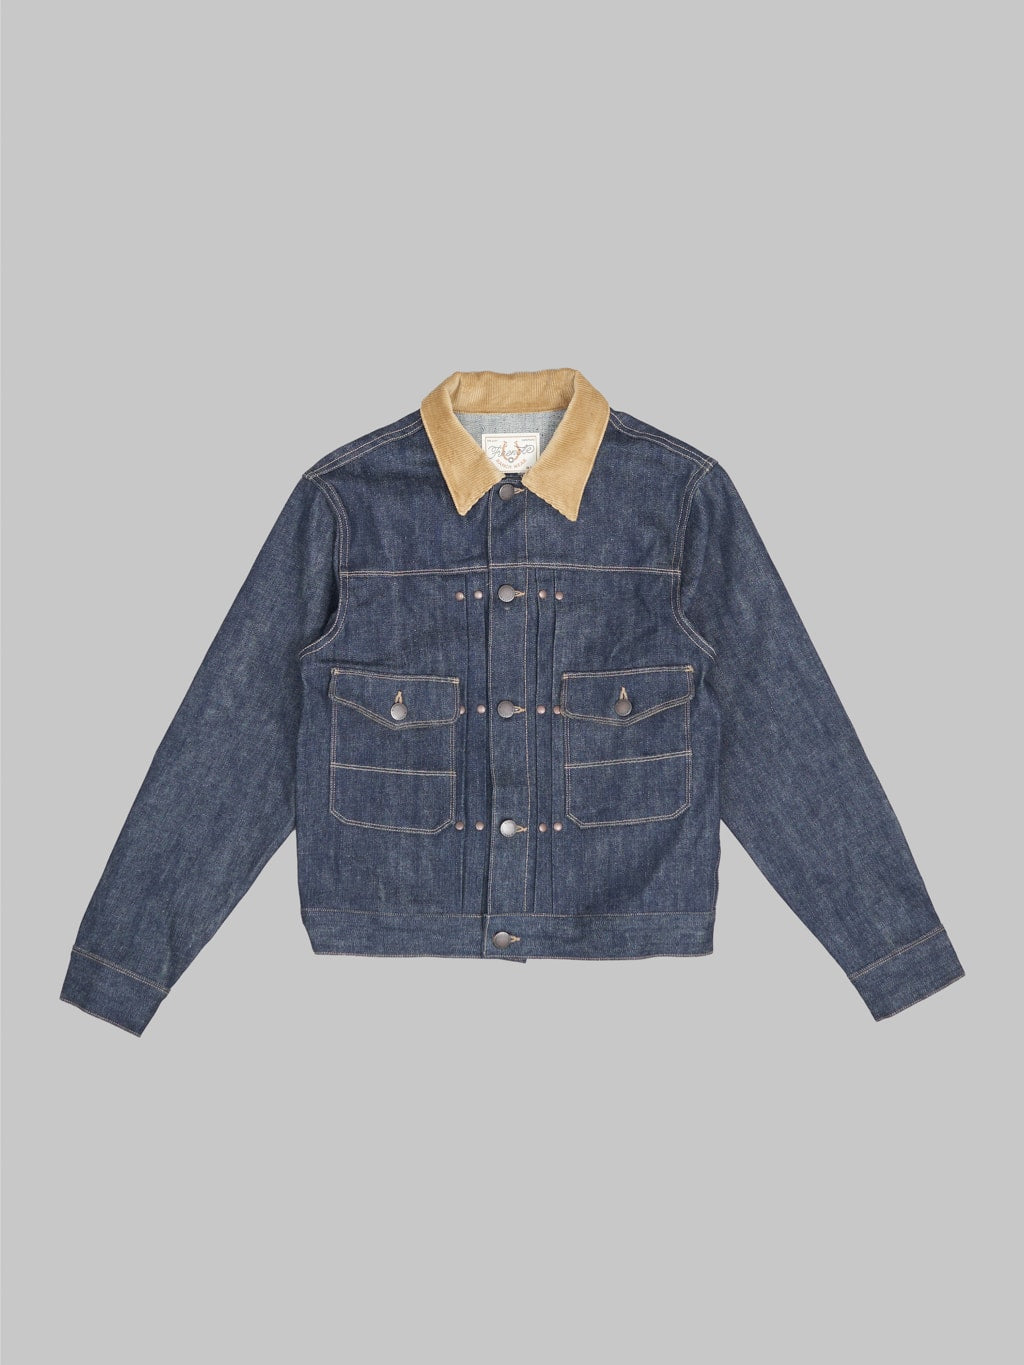 freenote cloth rj 313 ounce indigo selvedge denim jacket front